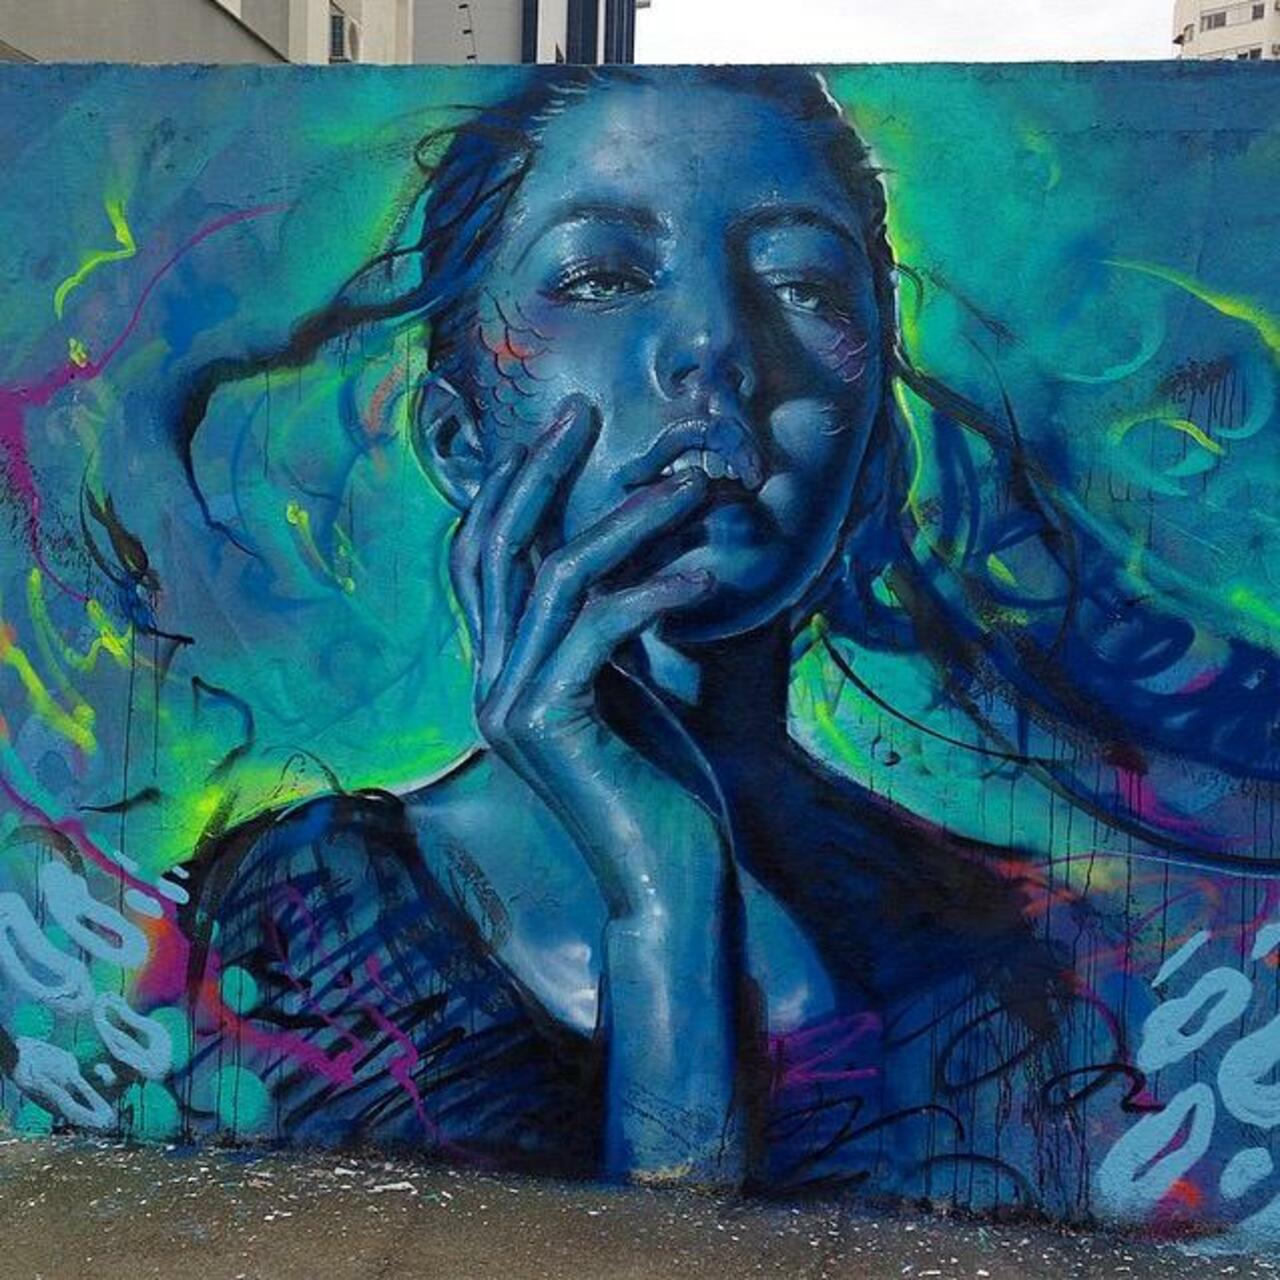 Thiago Valdi new Street Art piece titled 'Day Dreamer'

#art #mural #graffiti #streetart http://t.co/JNlVULYiwU